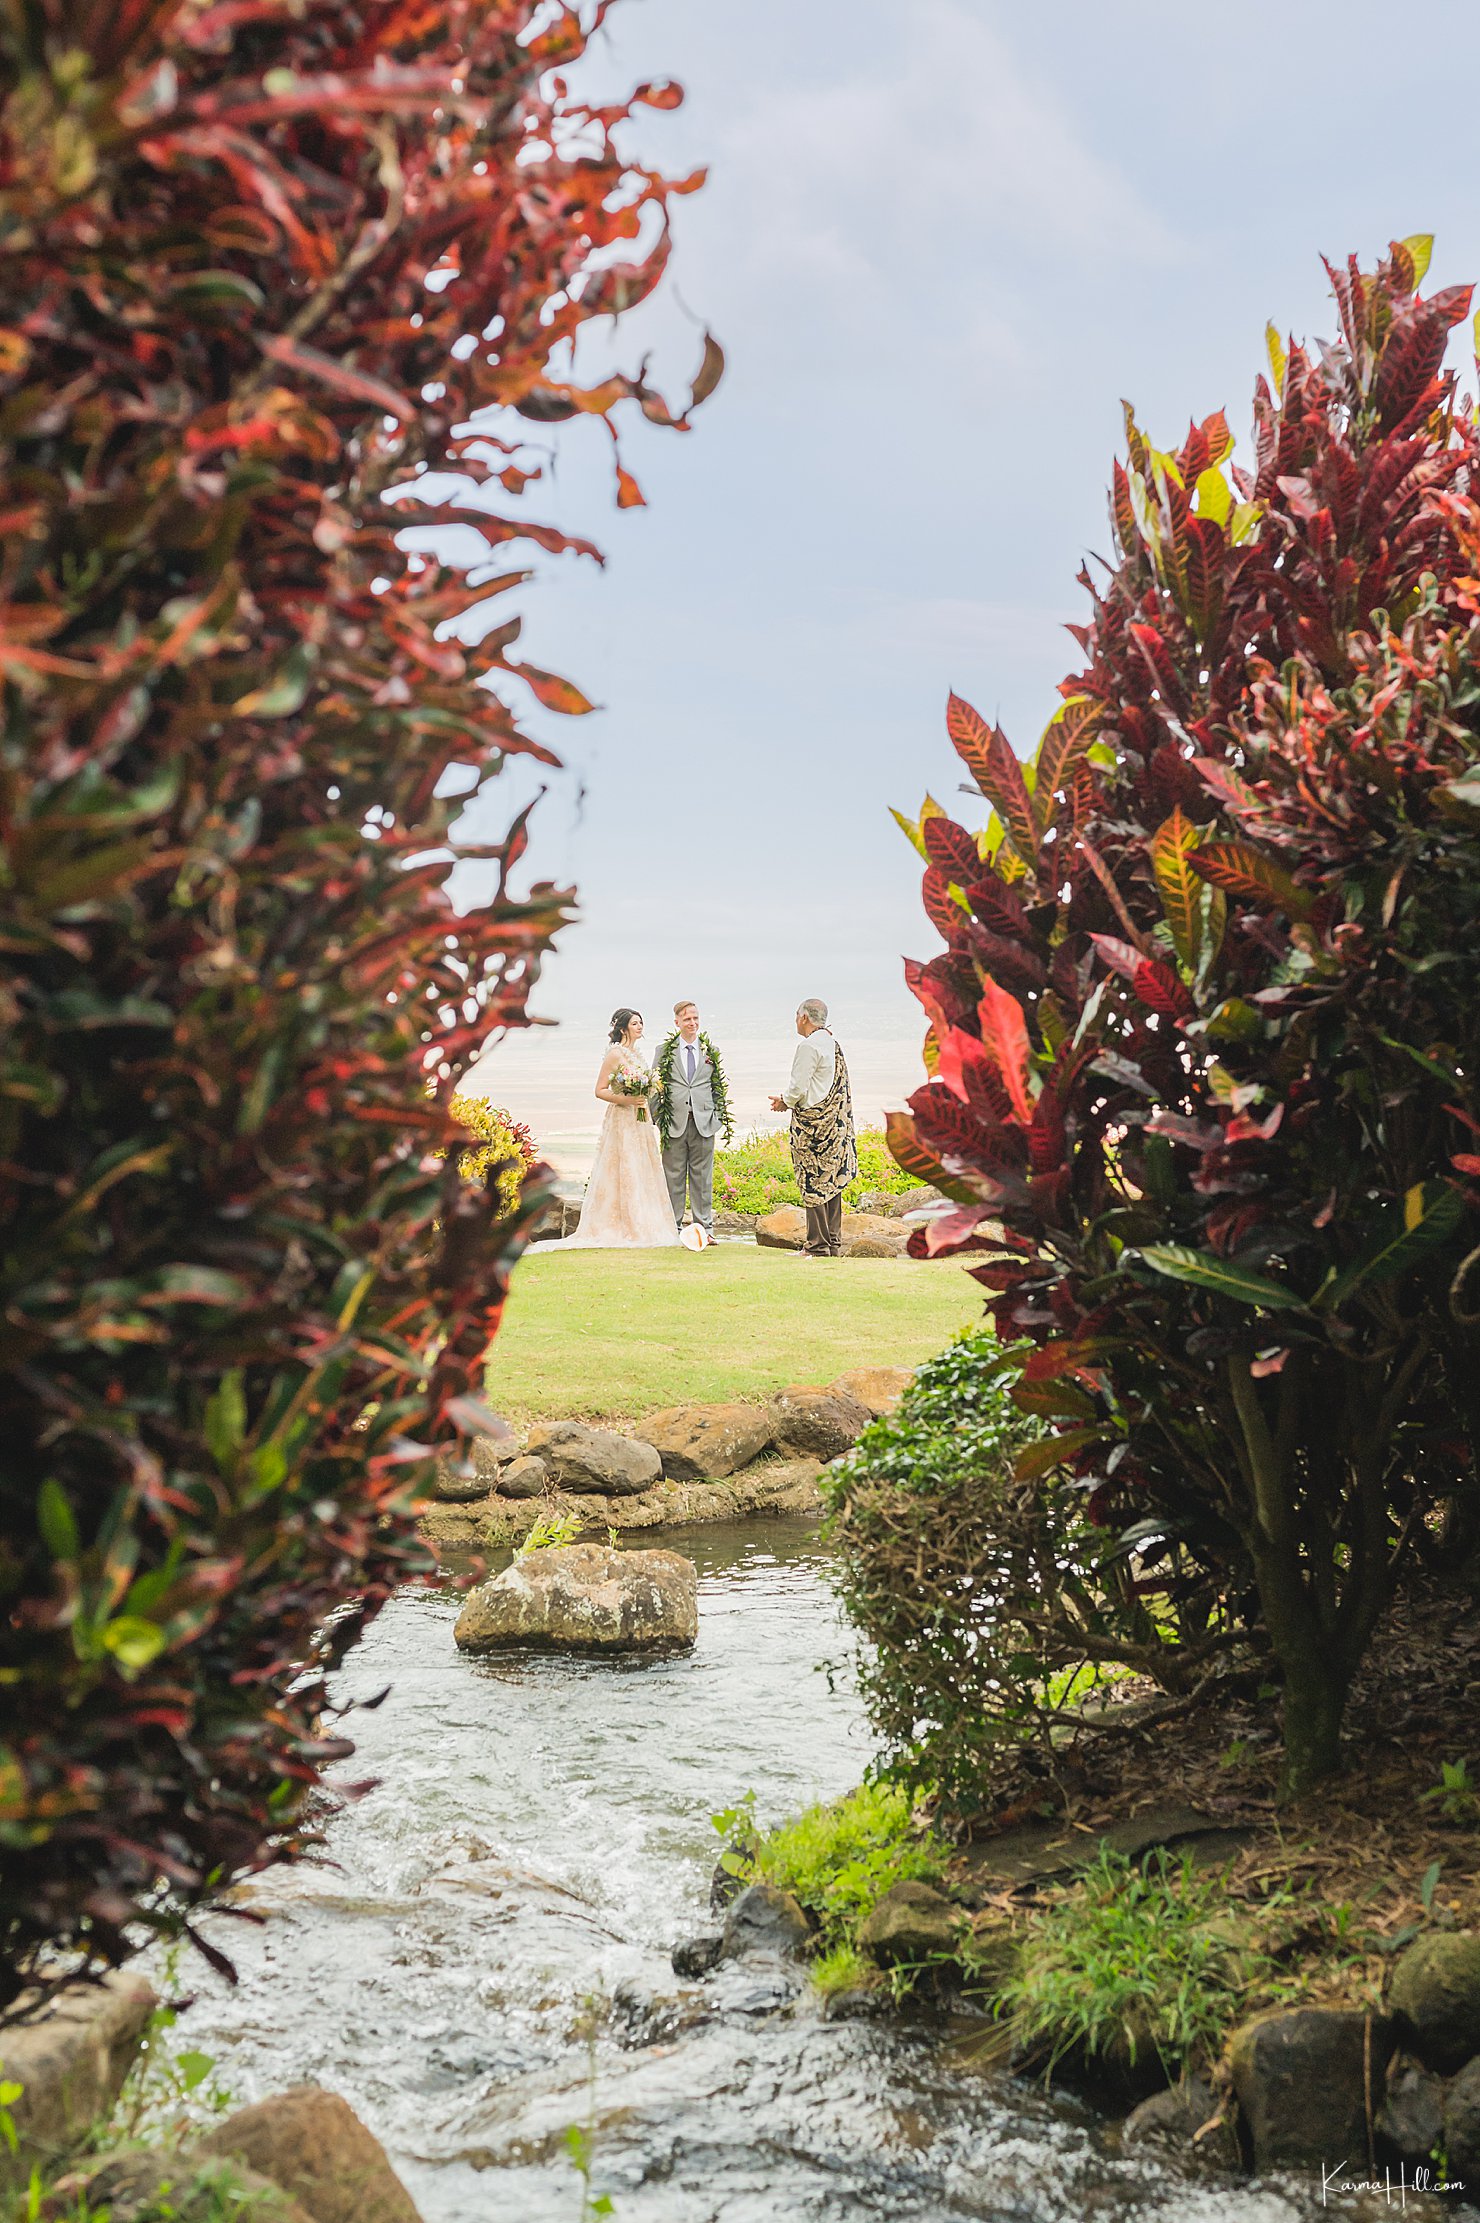 The King Kamehameha golf club maui wedding